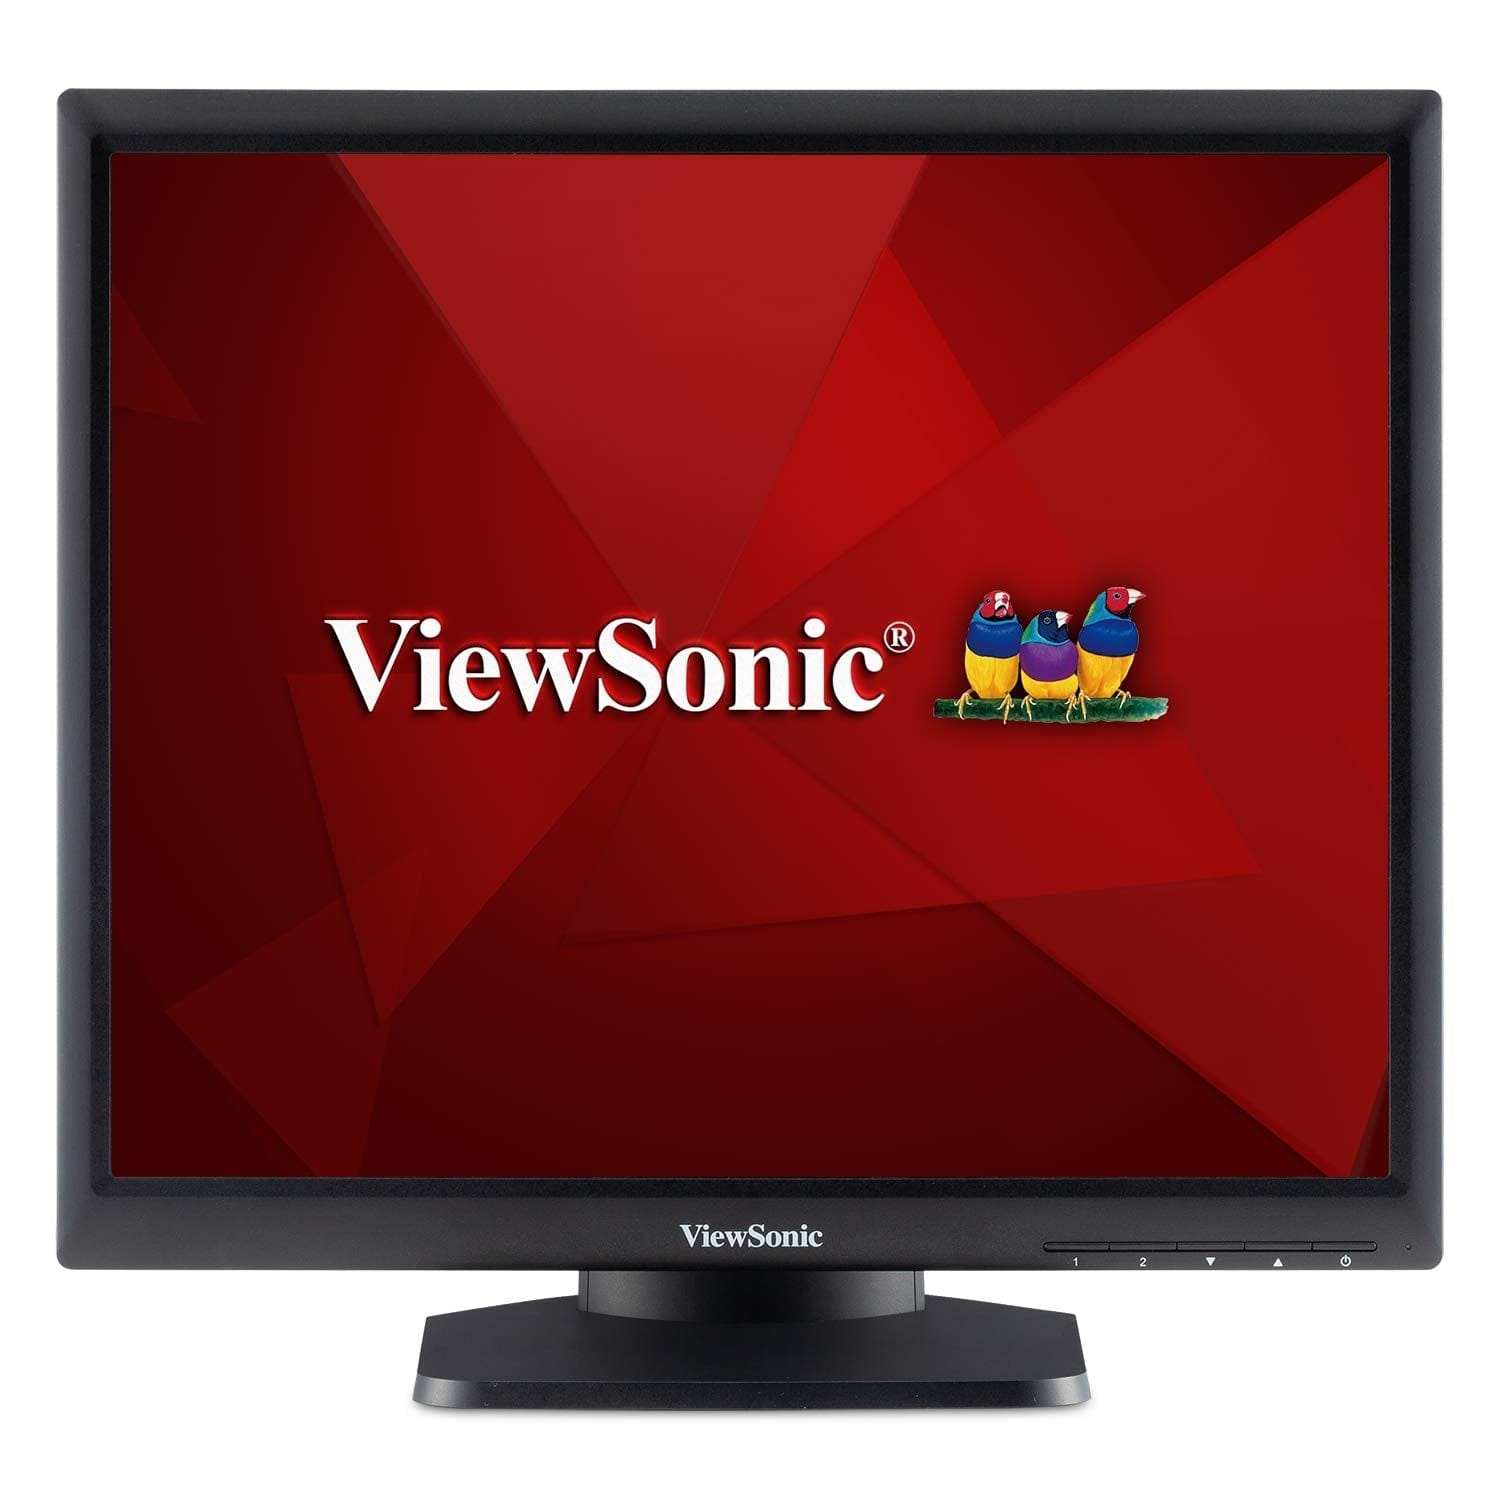 ViewSonic TD1711-R 17" Touchscreen LCD Monitor - C Grade Refurbished